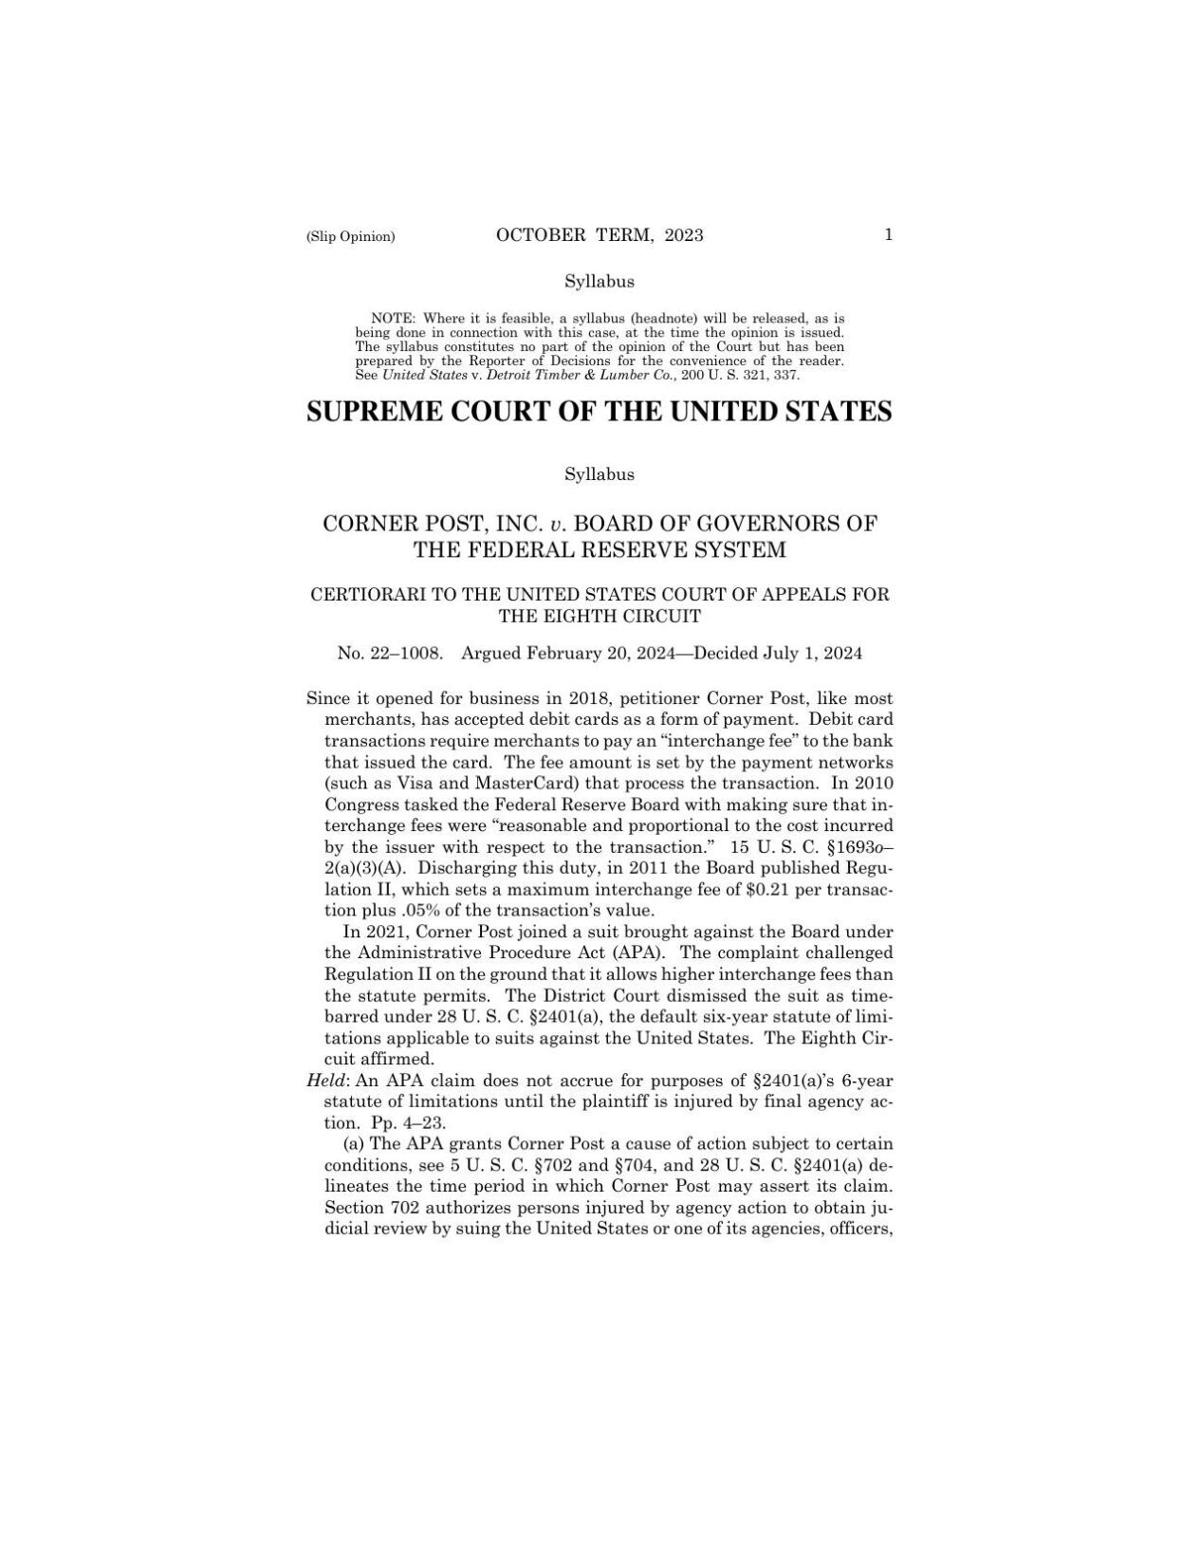 PDF: Read the Supreme Court Corner Post ruling